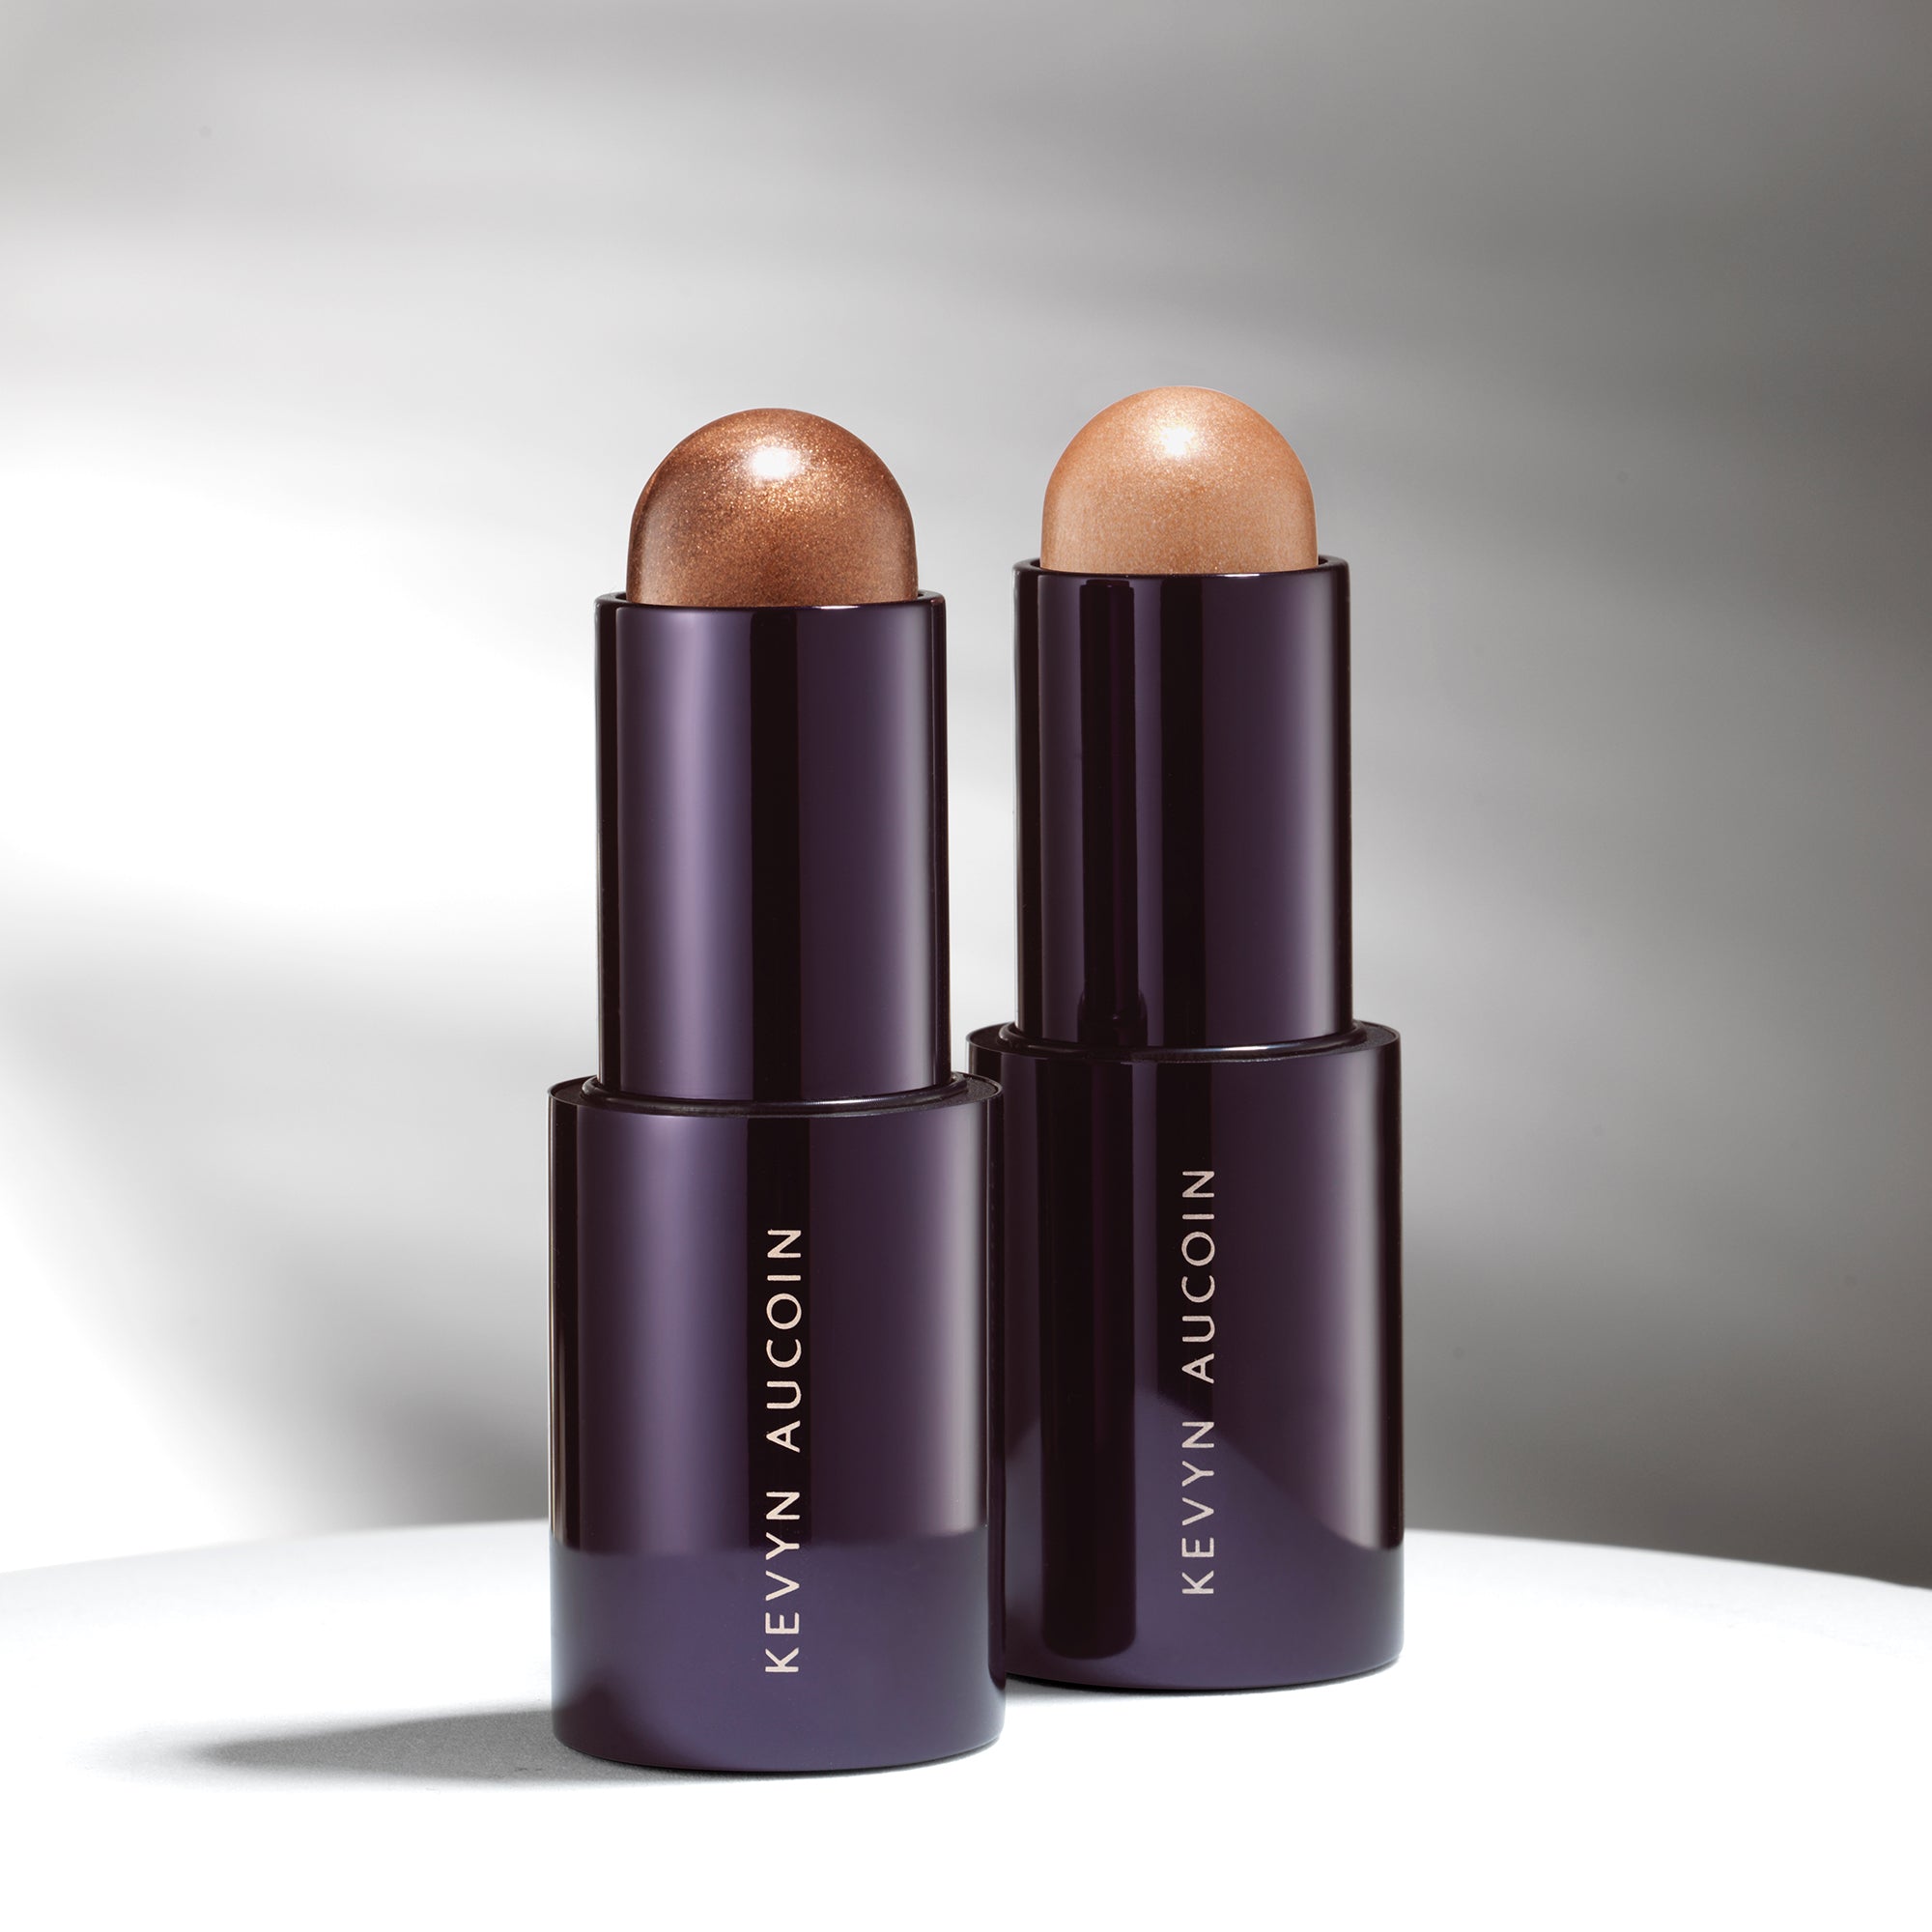 The Lighting Stick | Complexion Enhancing Makeup – Kevyn Aucoin Beauty